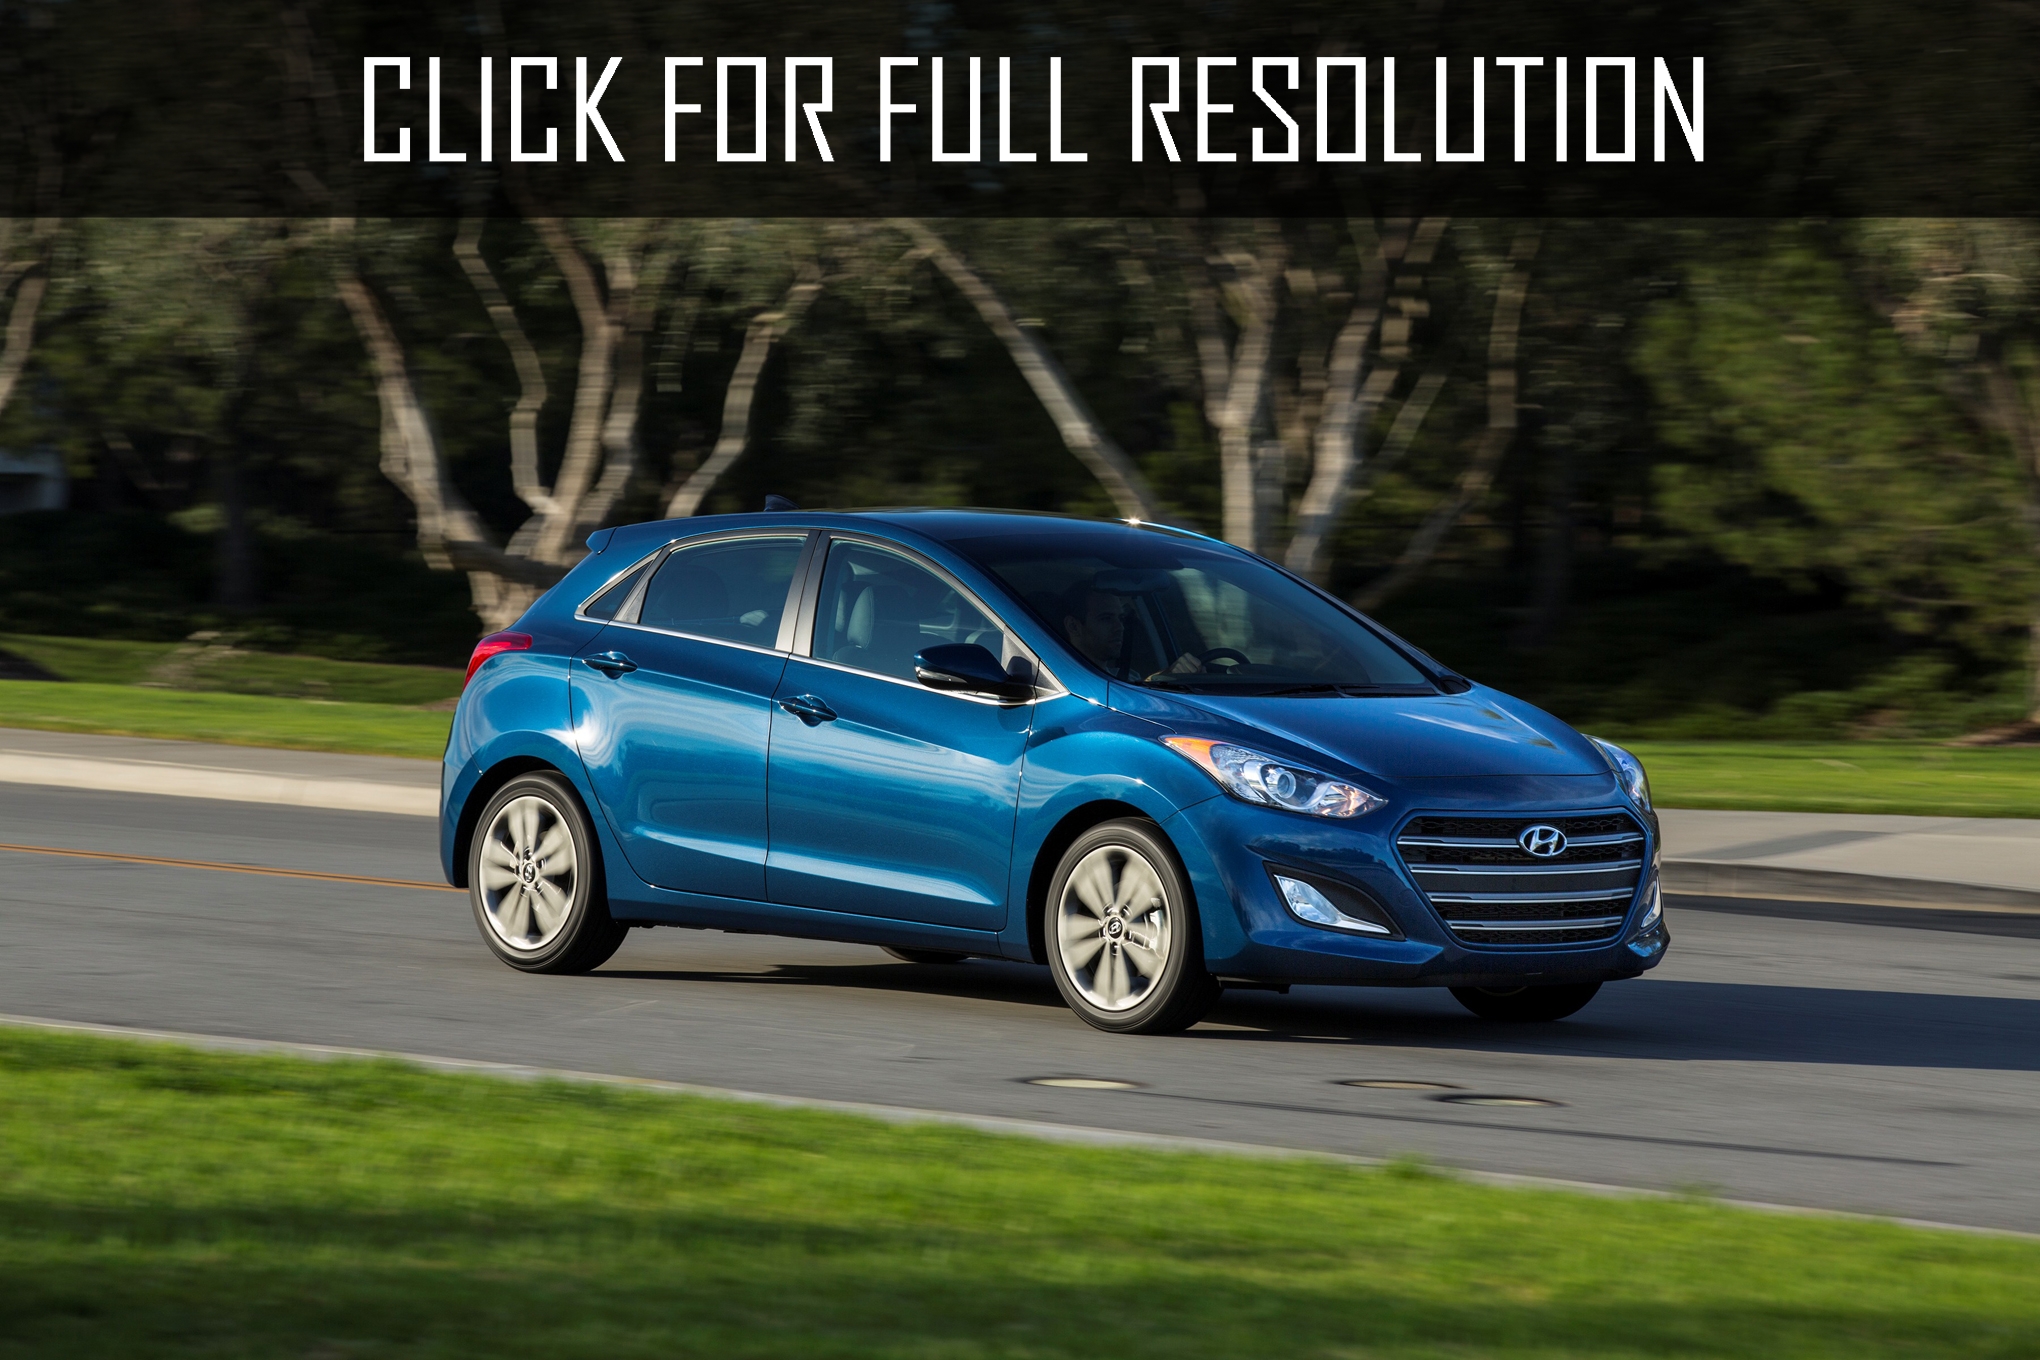 2016 Hyundai Elantra Hatchback news, reviews, msrp